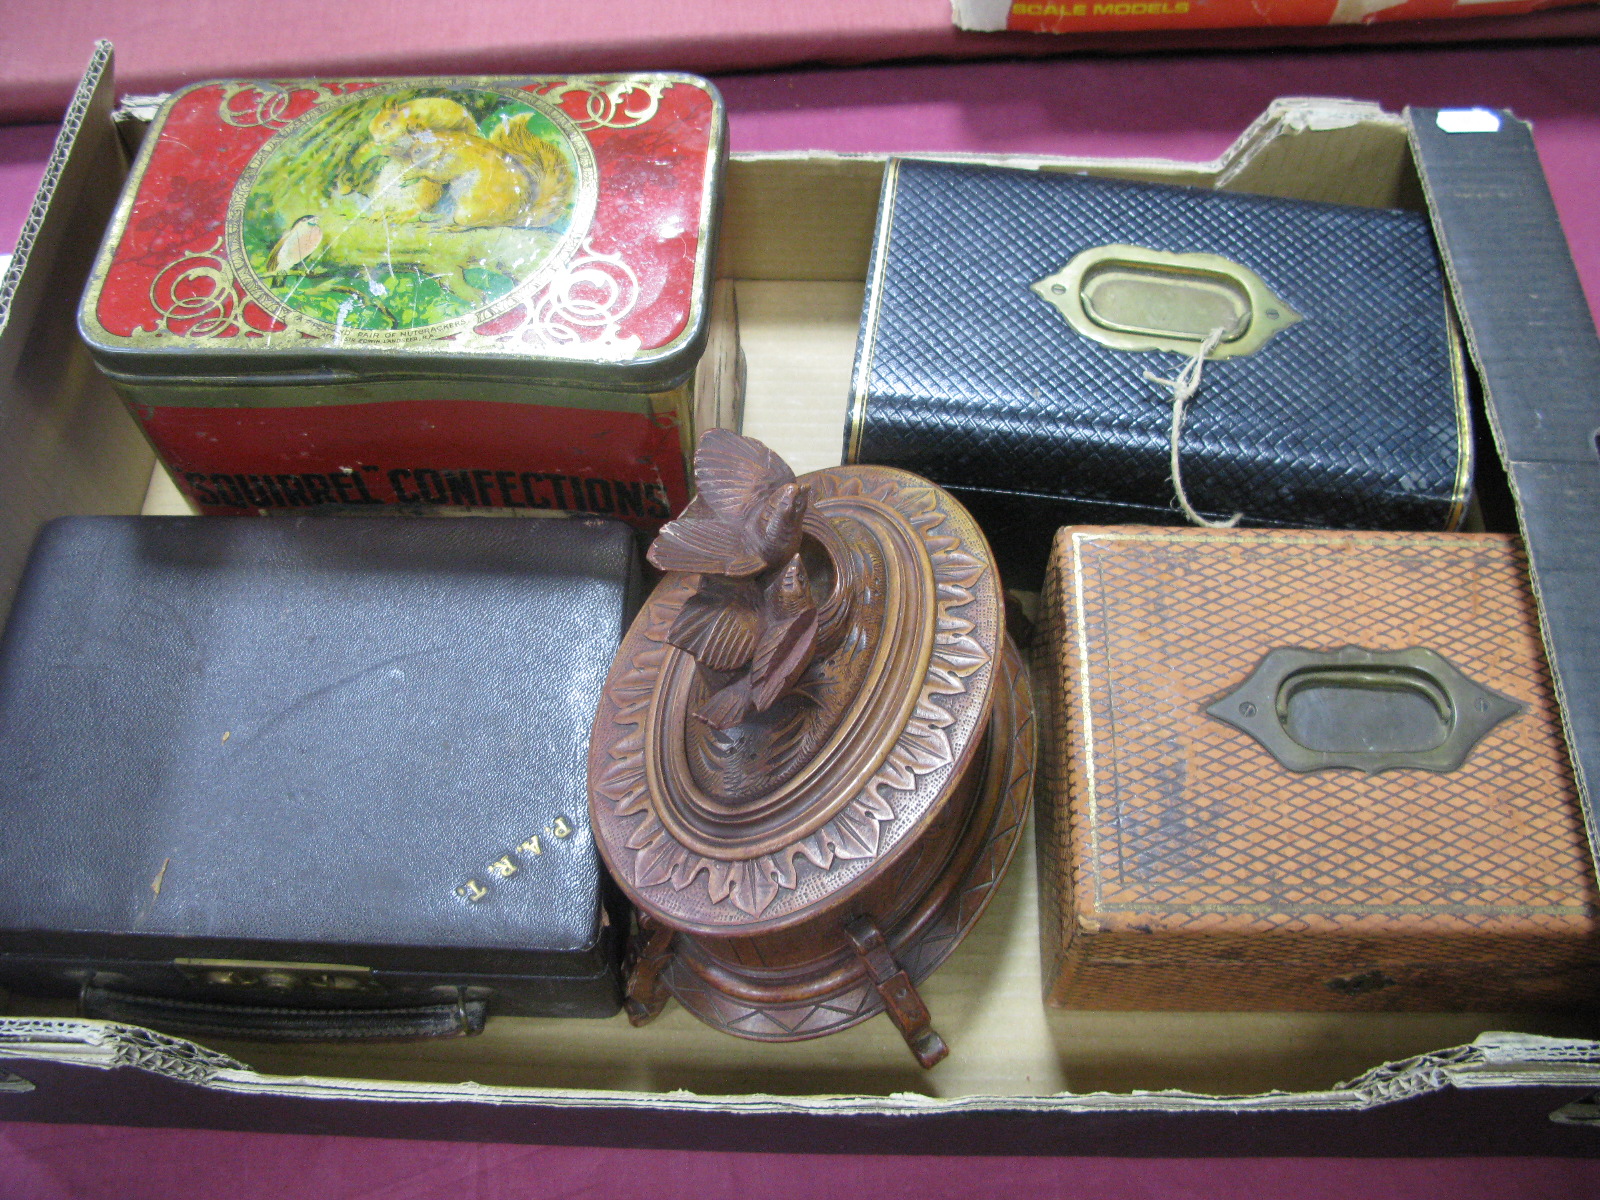 XIX Century Jewellery Boxes and Tins, etc:- One Box